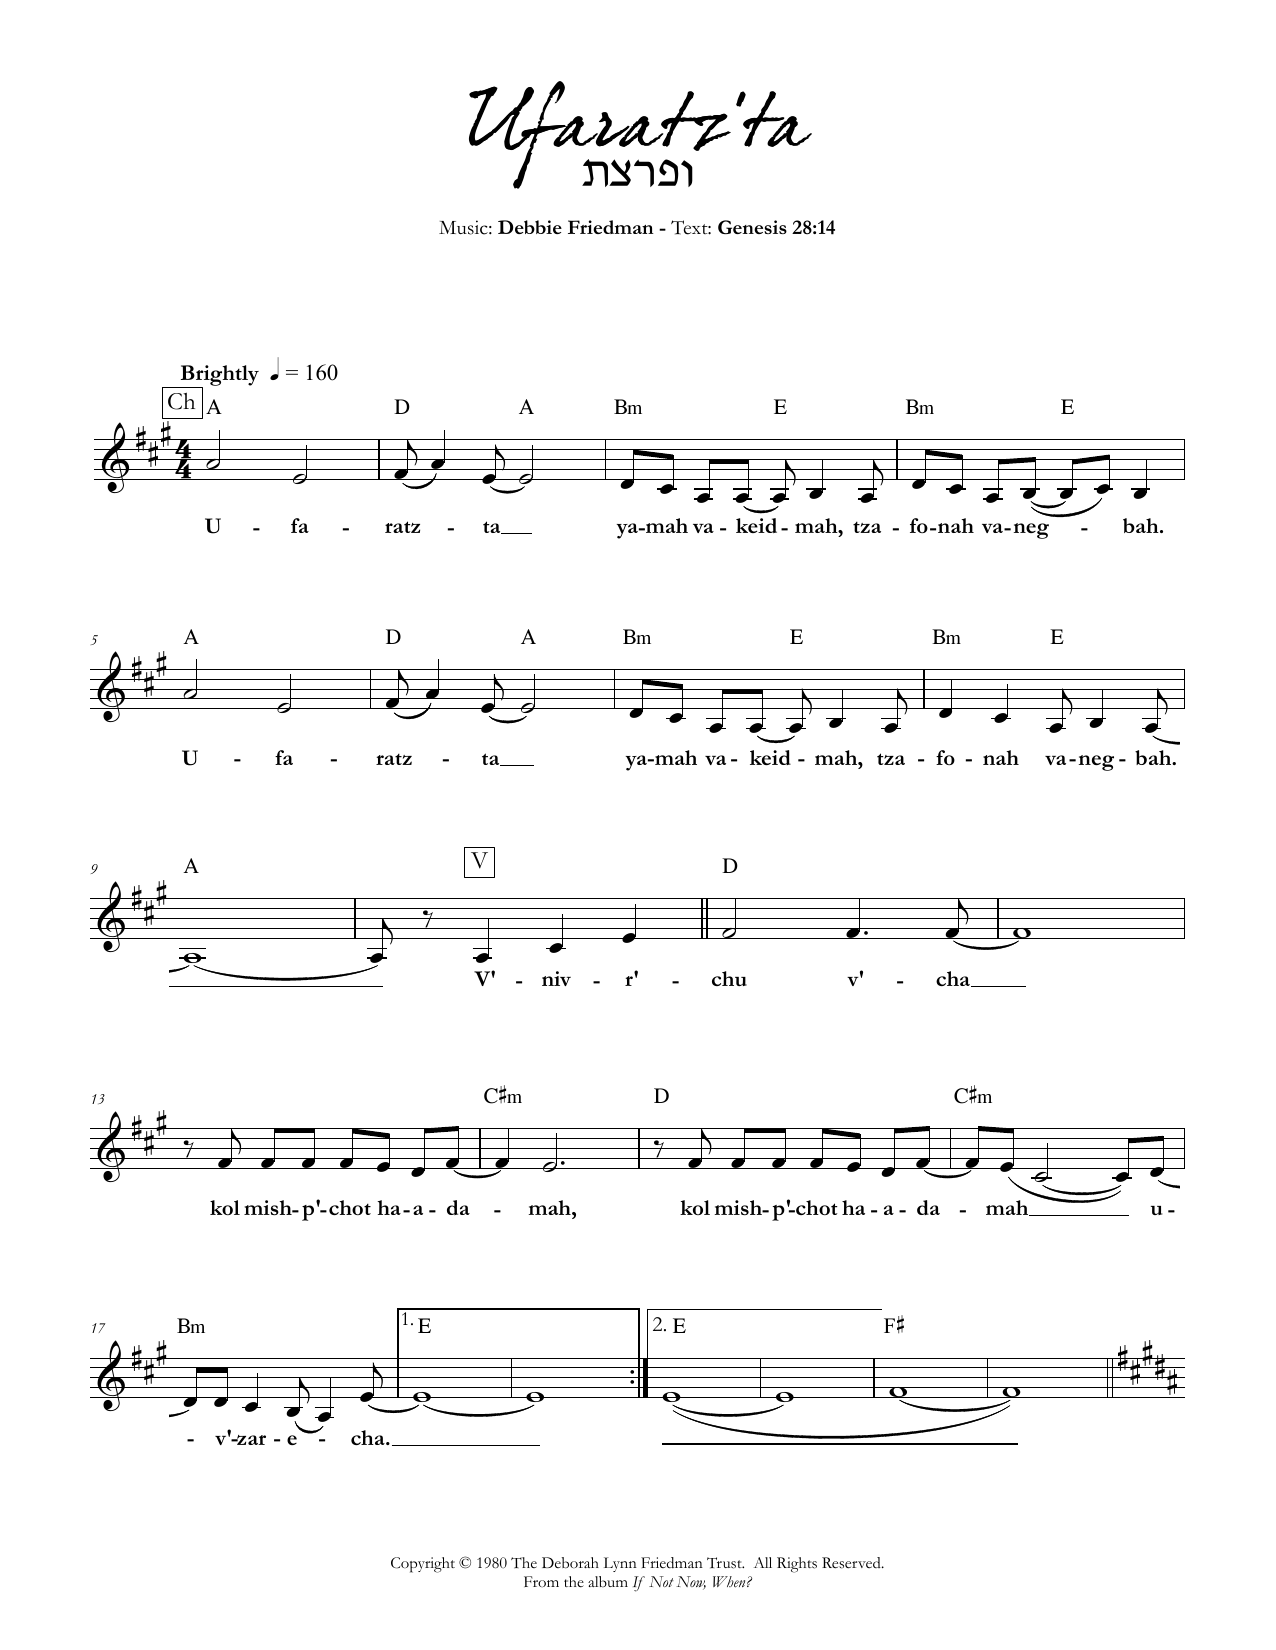 Ufaratz'ta sheet music